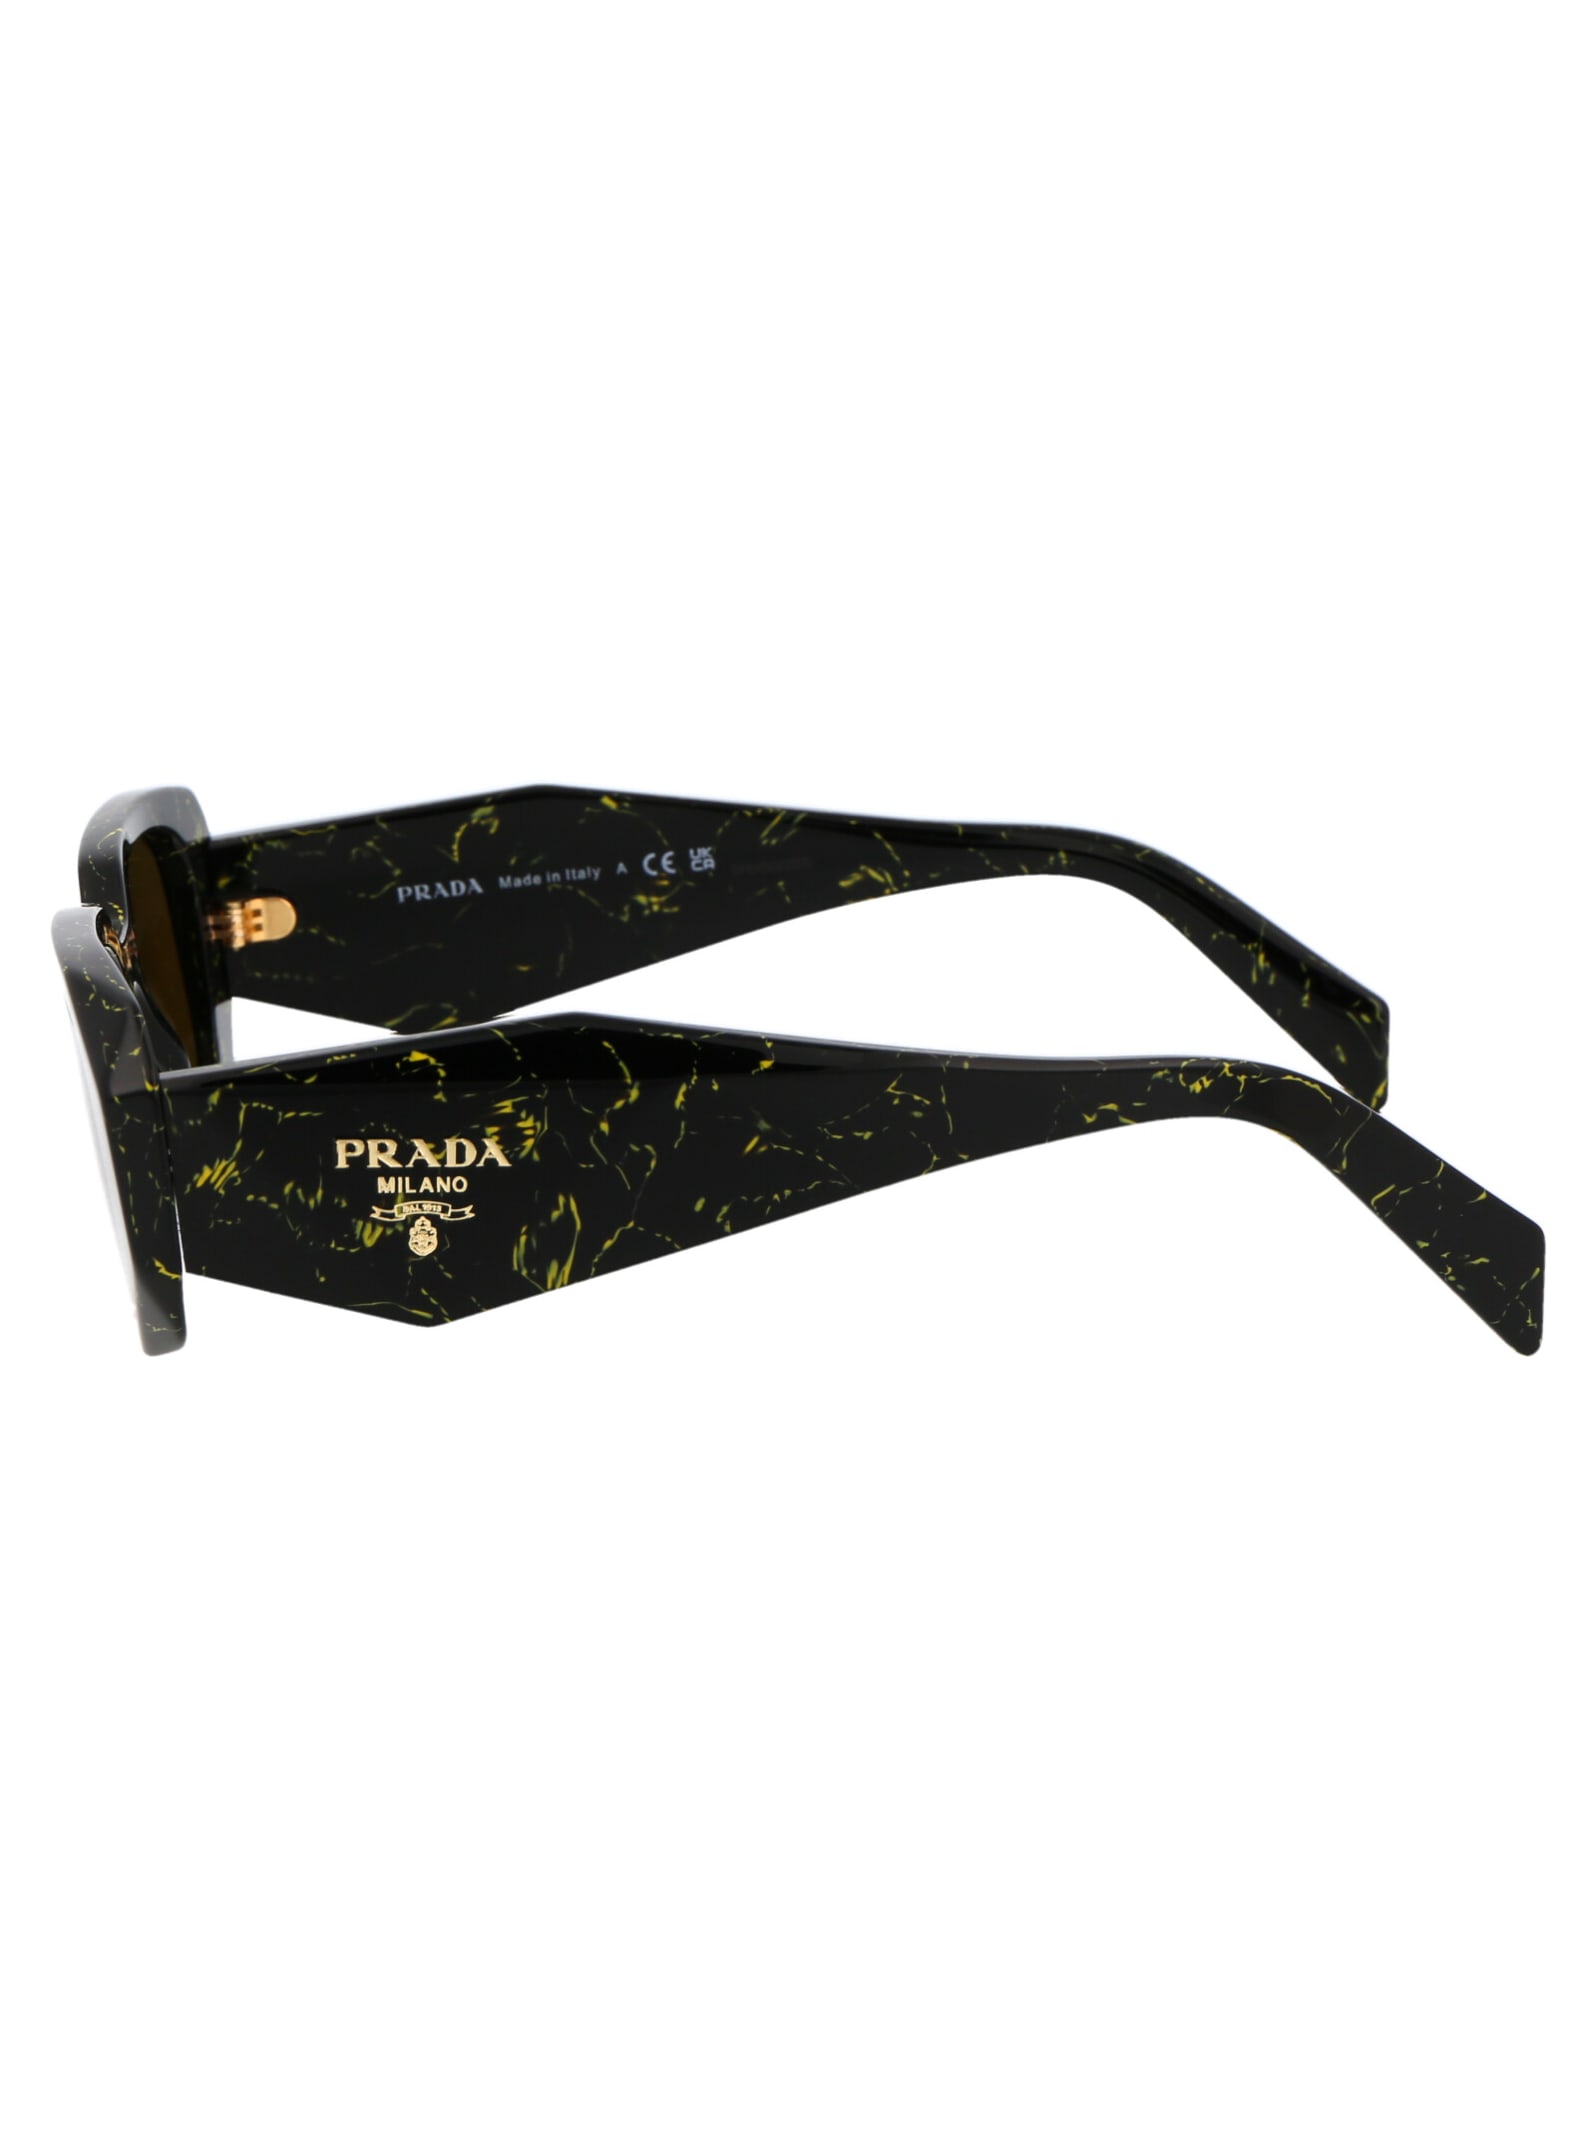 Shop Prada 0pr 17ws Sunglasses In 19d01t Black/yellow Marble